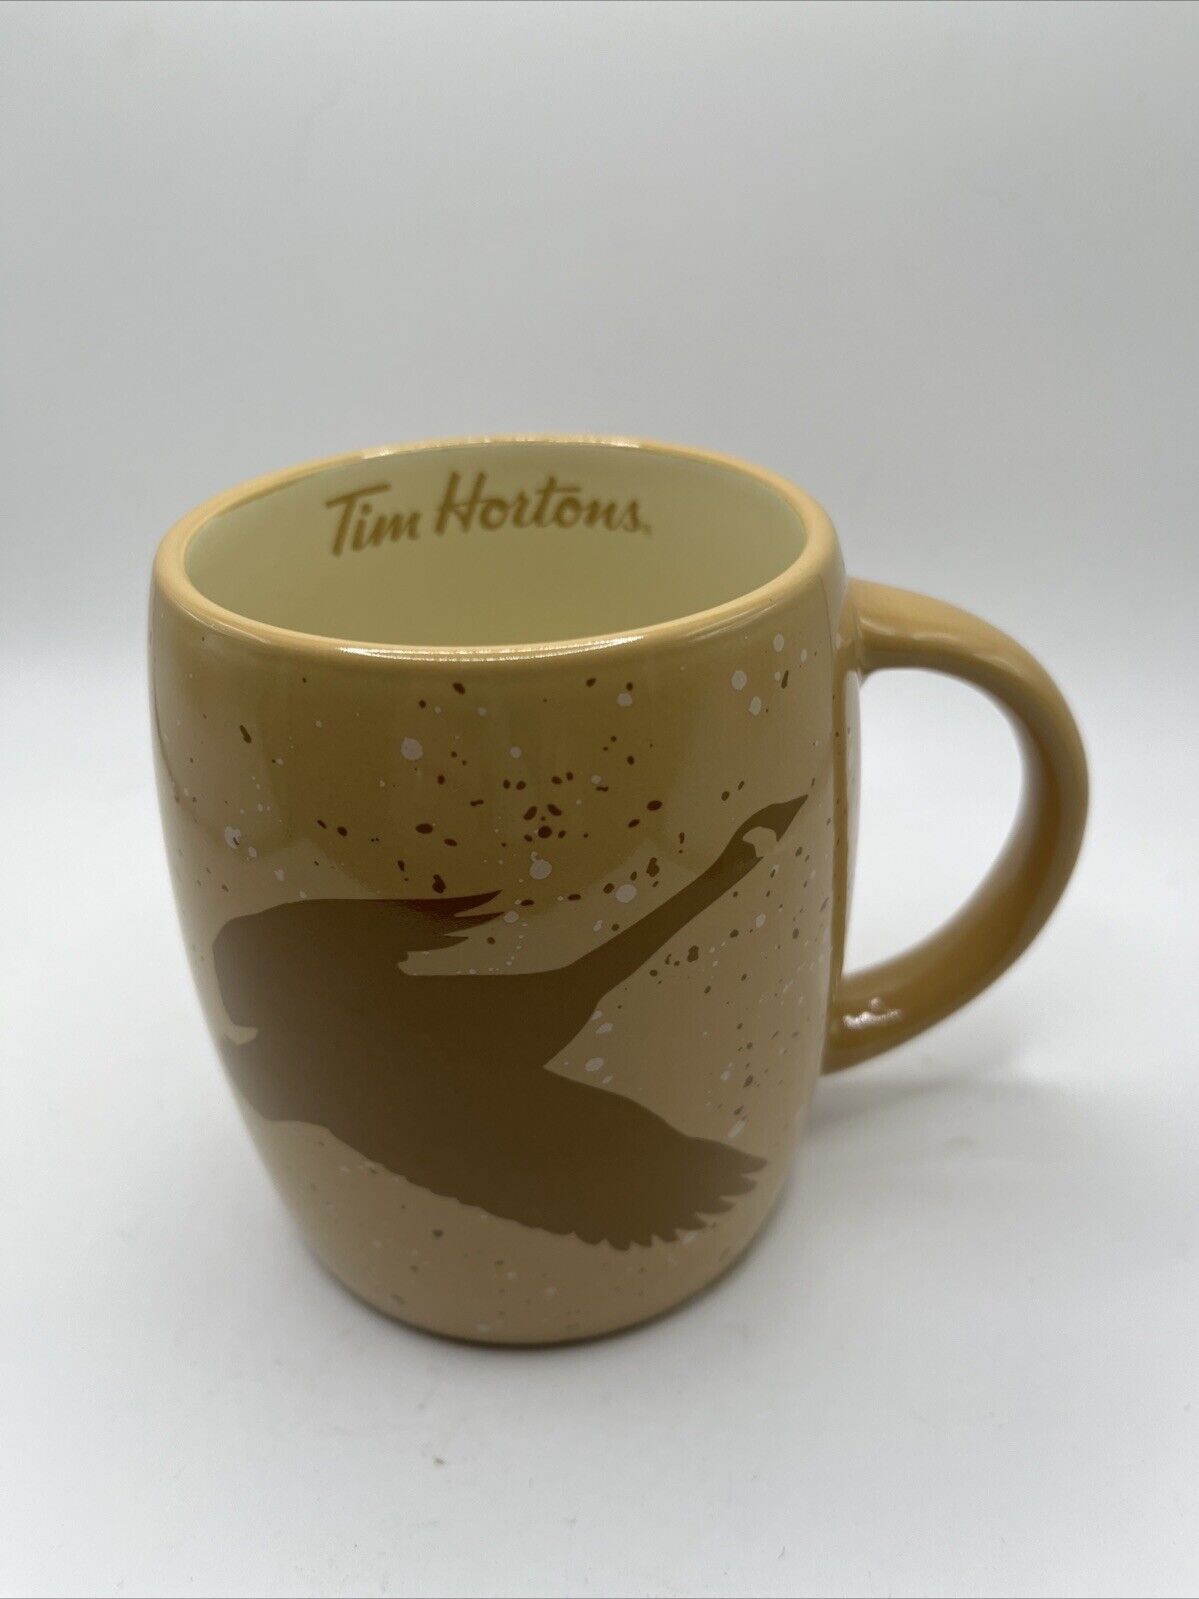 Tim Hortons Limited Edition 2016 Canada Goose Ceramic Coffee Mug Cup No. 016